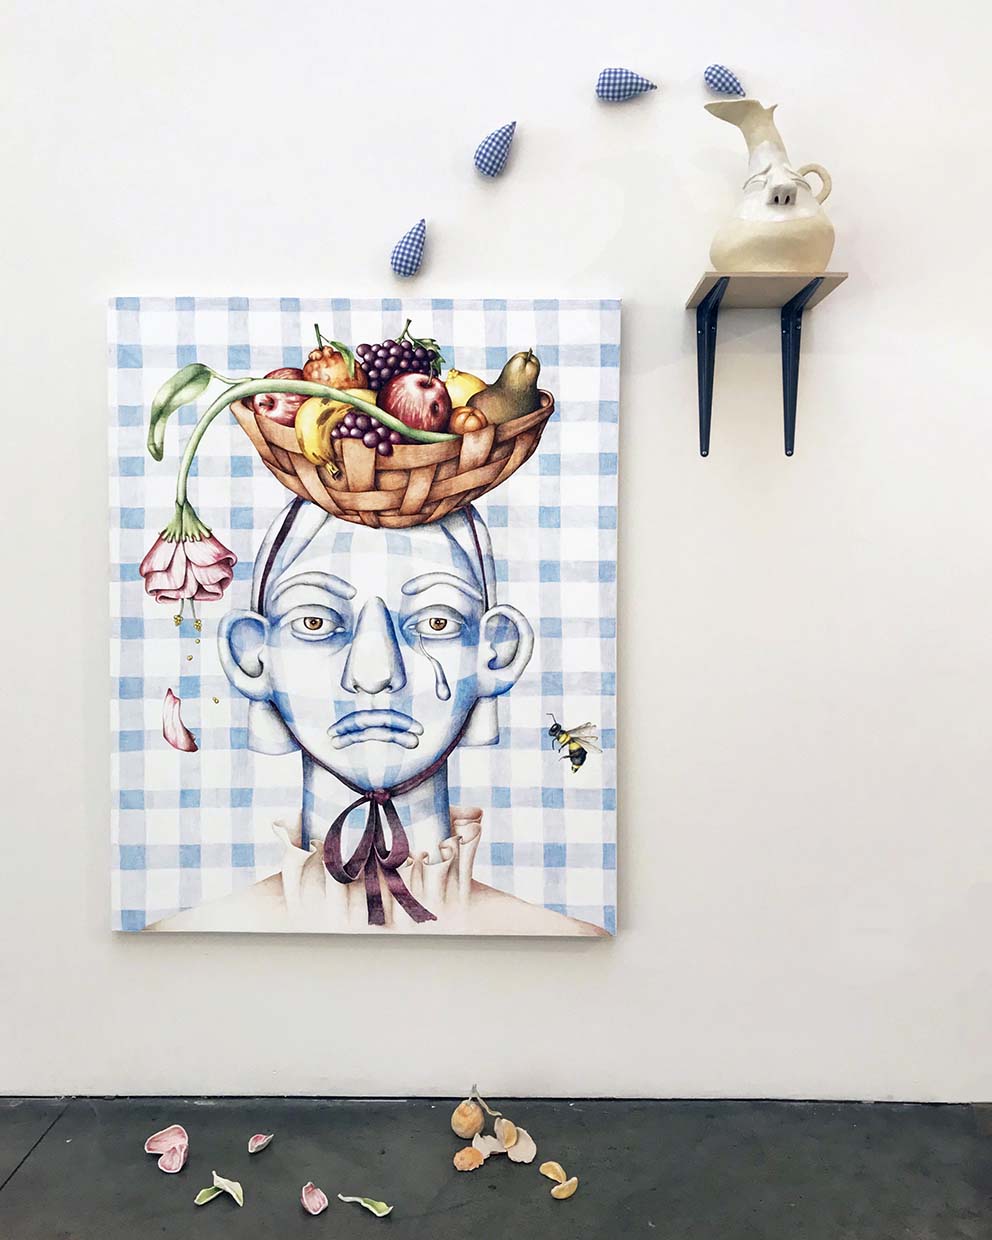 Samantha Rosenwald, Wêt Galante, 2018, colored pencil on canvas, colored pencil and glaze on ceramic, fabric, wood, canvas: 48x60